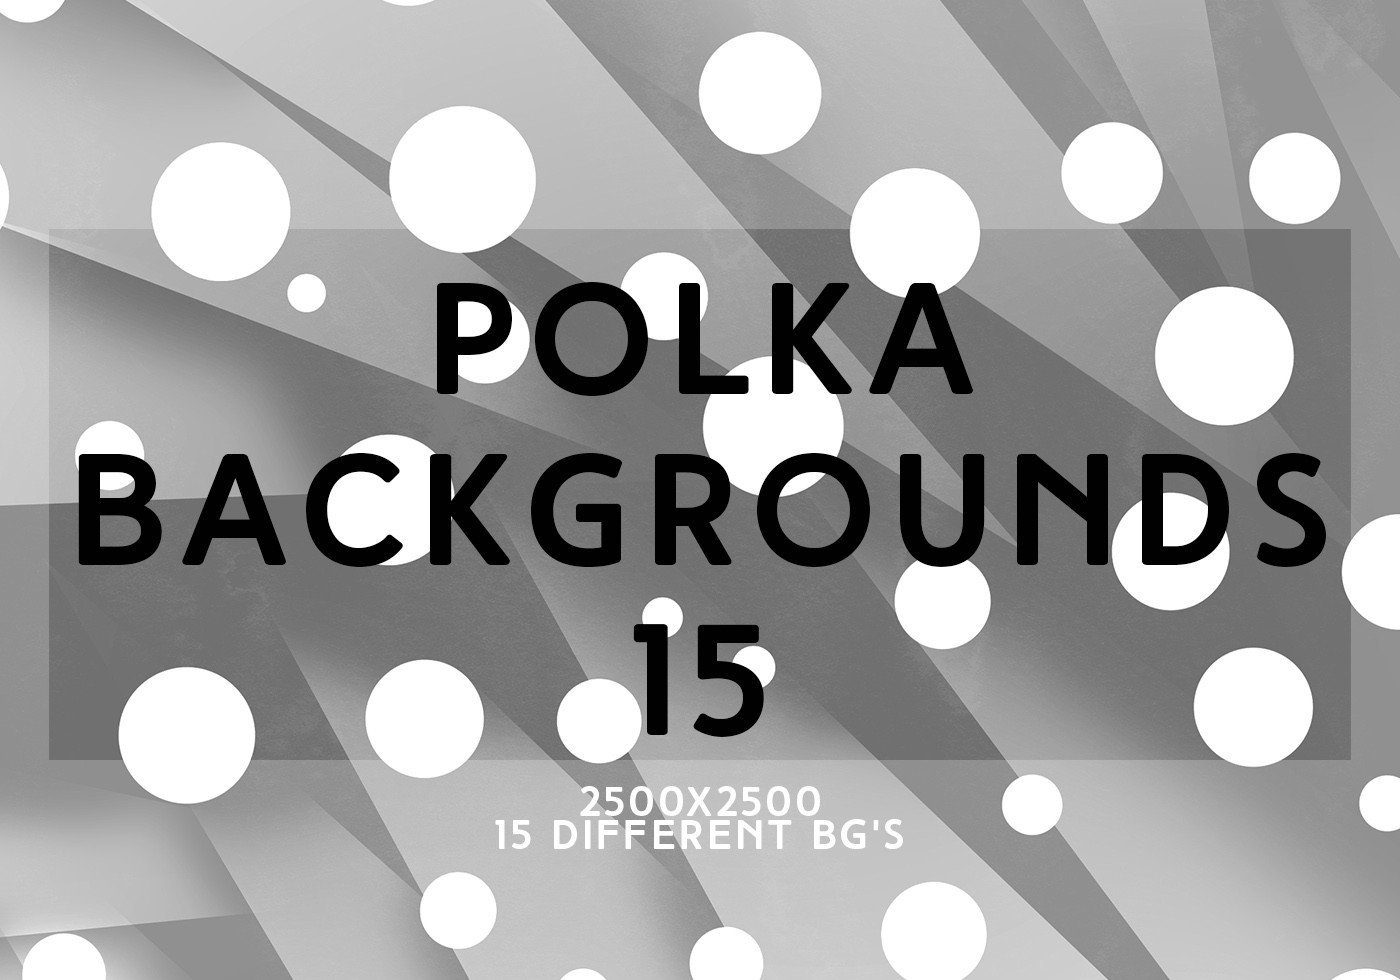 Polka Backgrounds 15 Free shop Brushes at Brusheezy